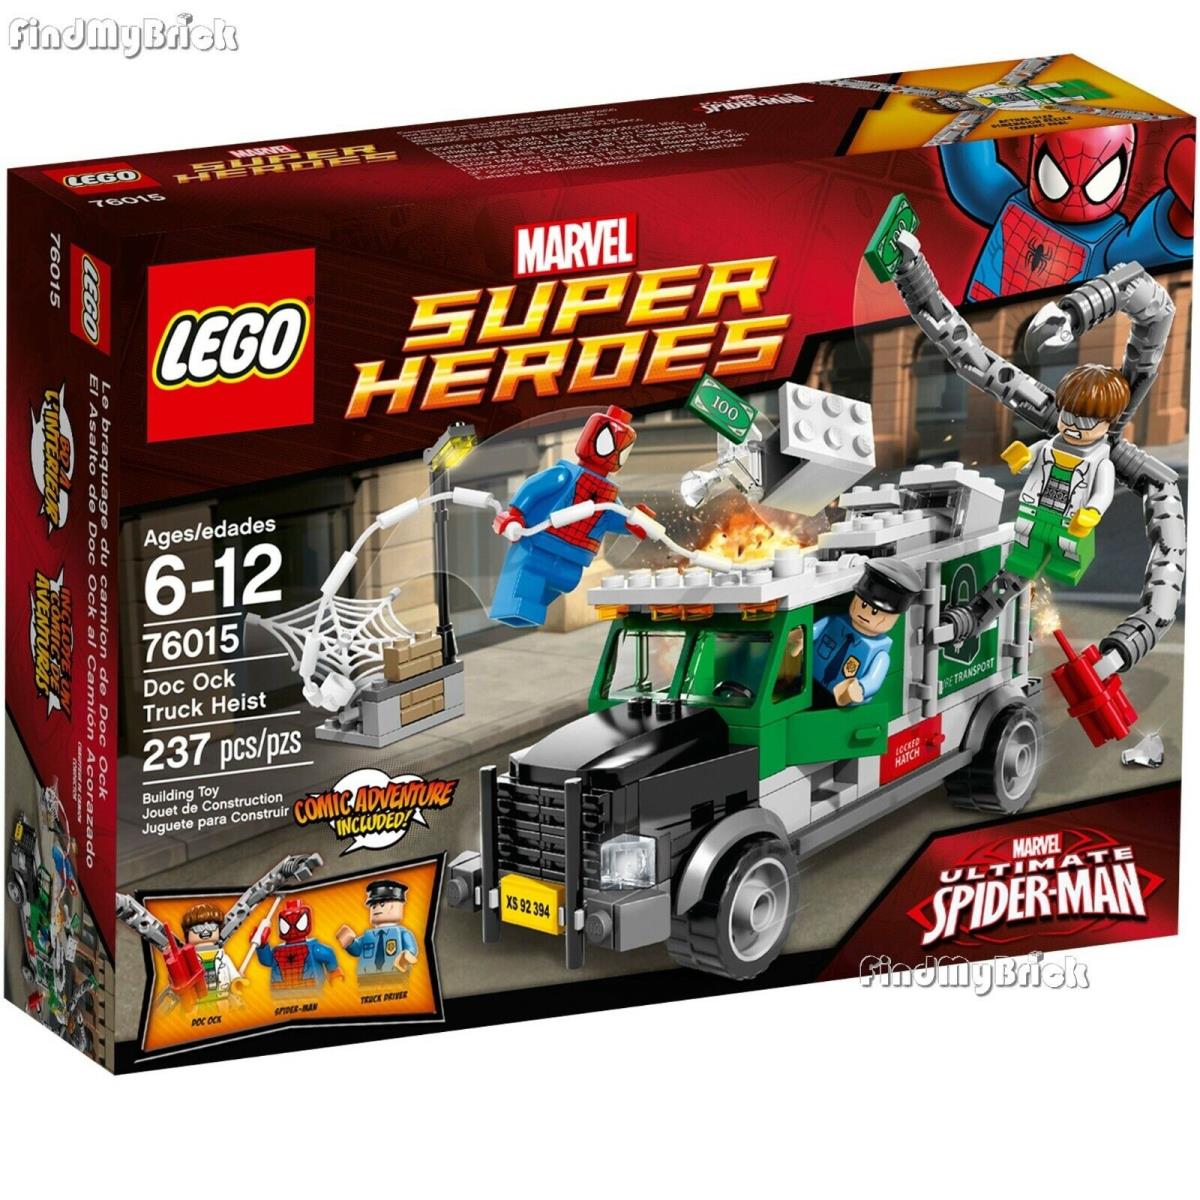 Lego Marvel Super Heroes Ultimate Spider-man 76015 Doc Ock Truck Heist